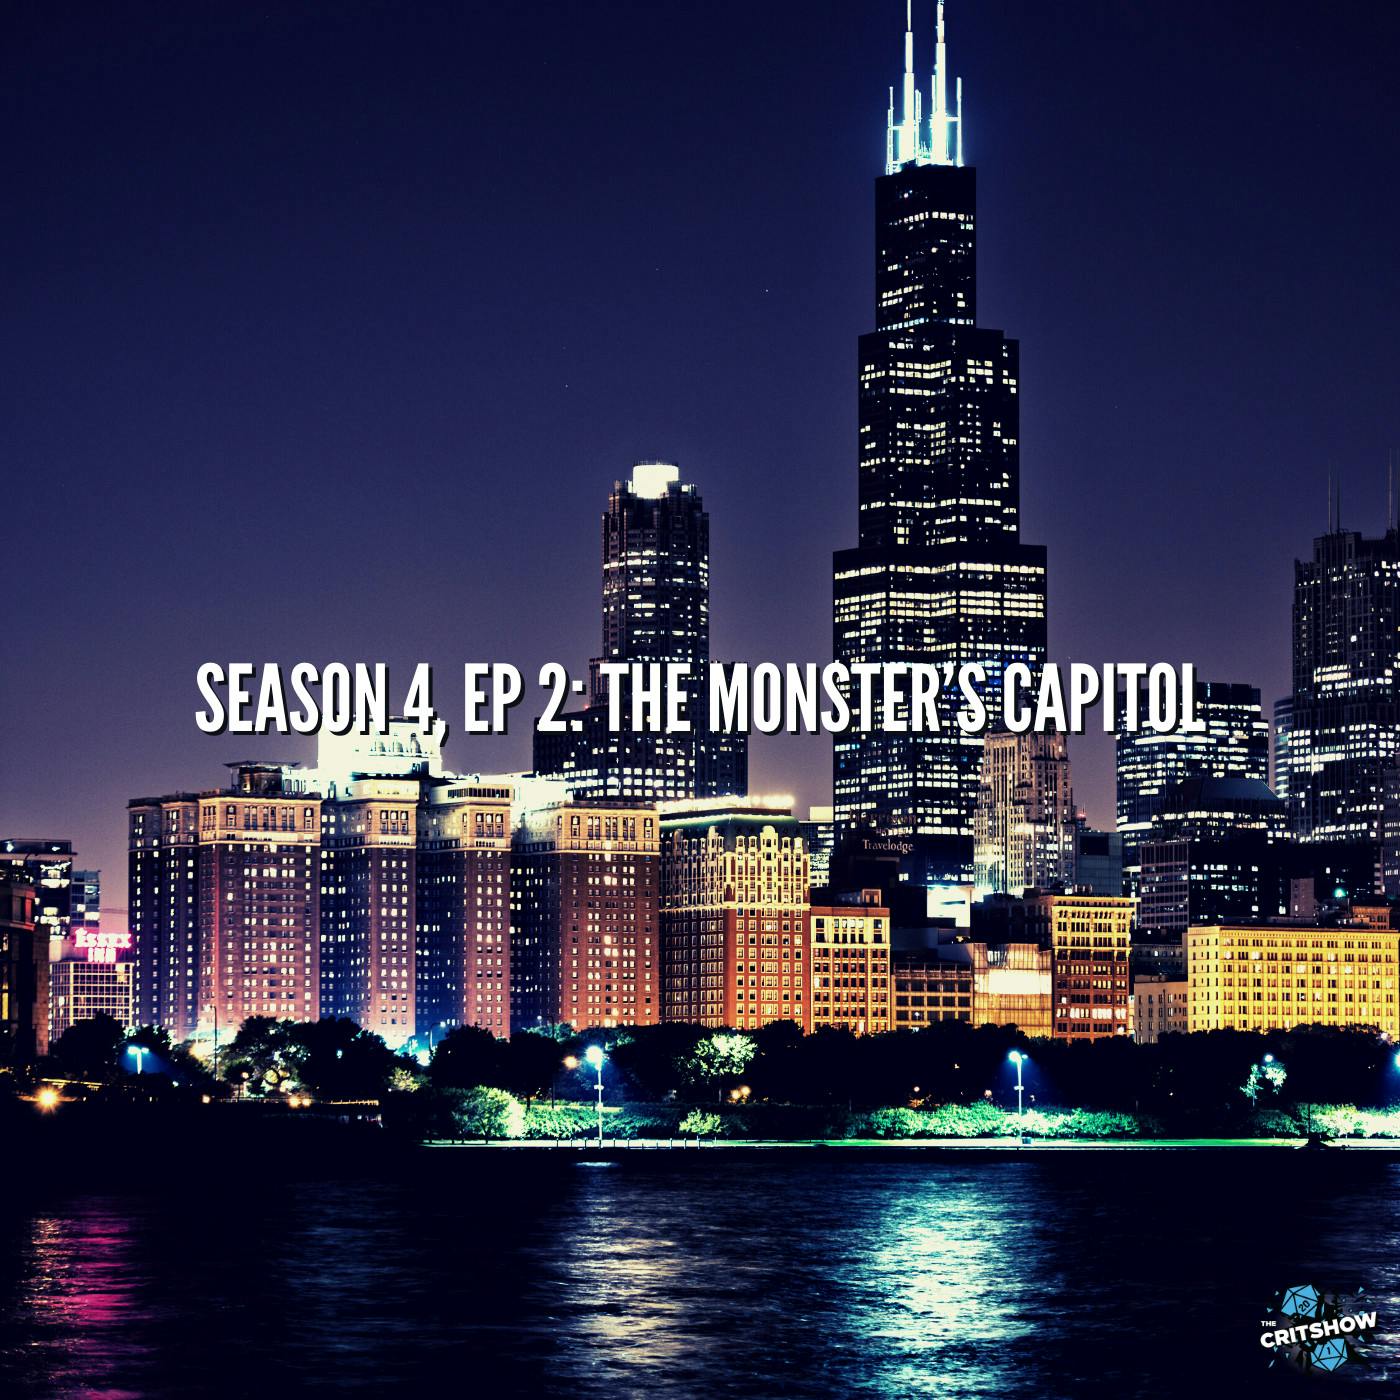 The Monster’s Capitol (S4, E2)